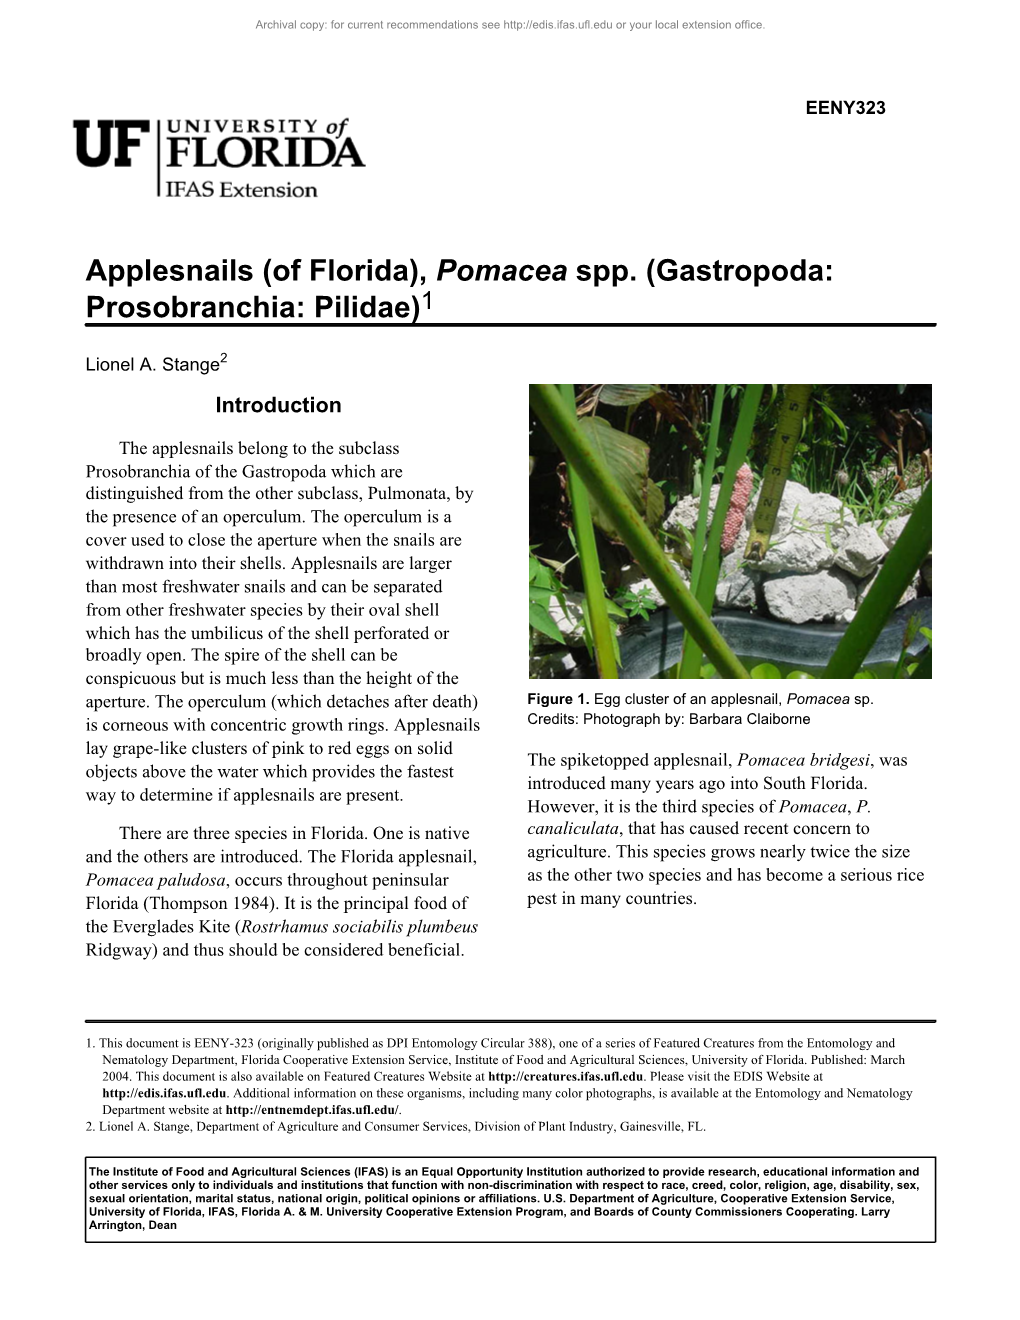 (Of Florida), Pomacea Spp. (Gastropoda: Prosobranchia: Pilidae)1